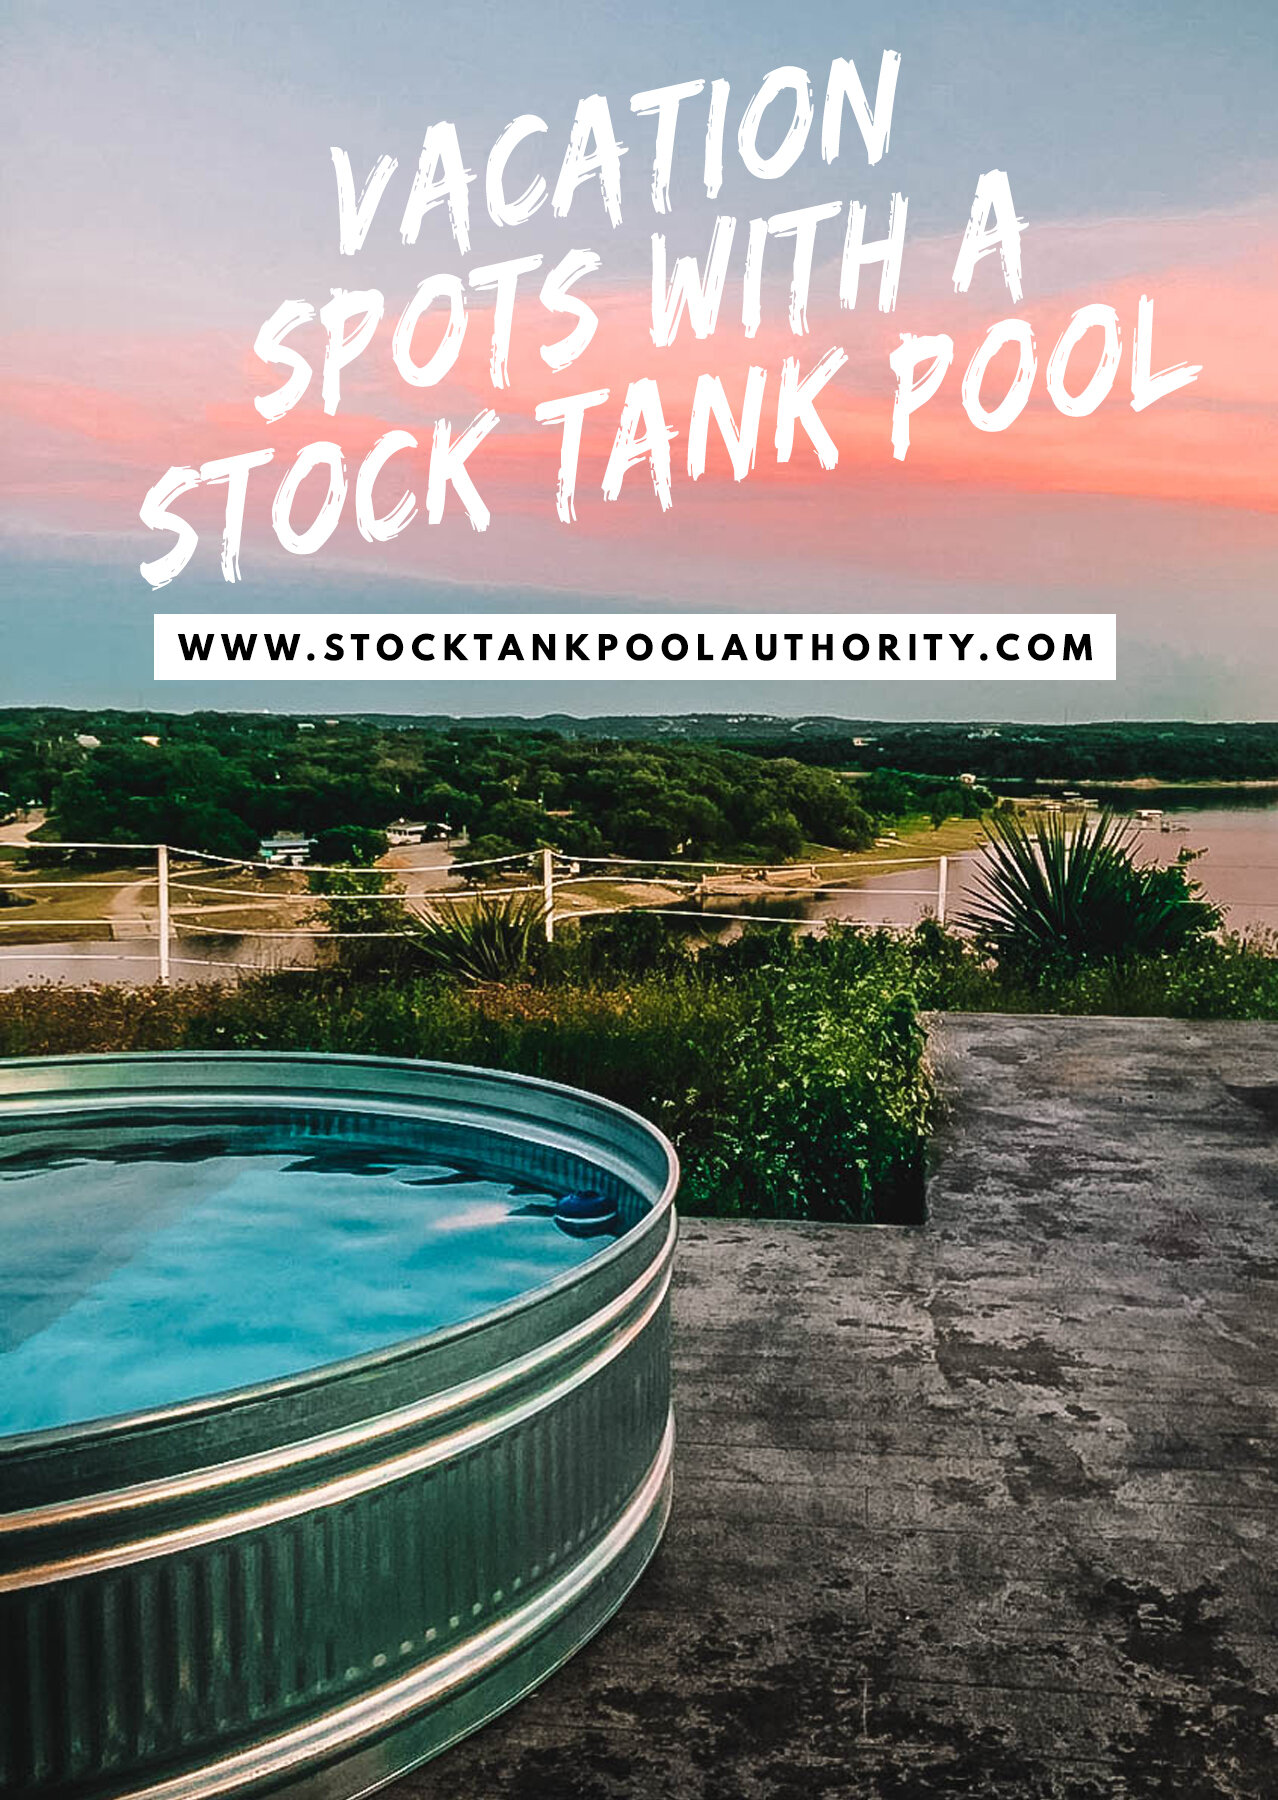 Stock Tank Pool Authority Pinterest Stock Tank Pool Vacations.jpg